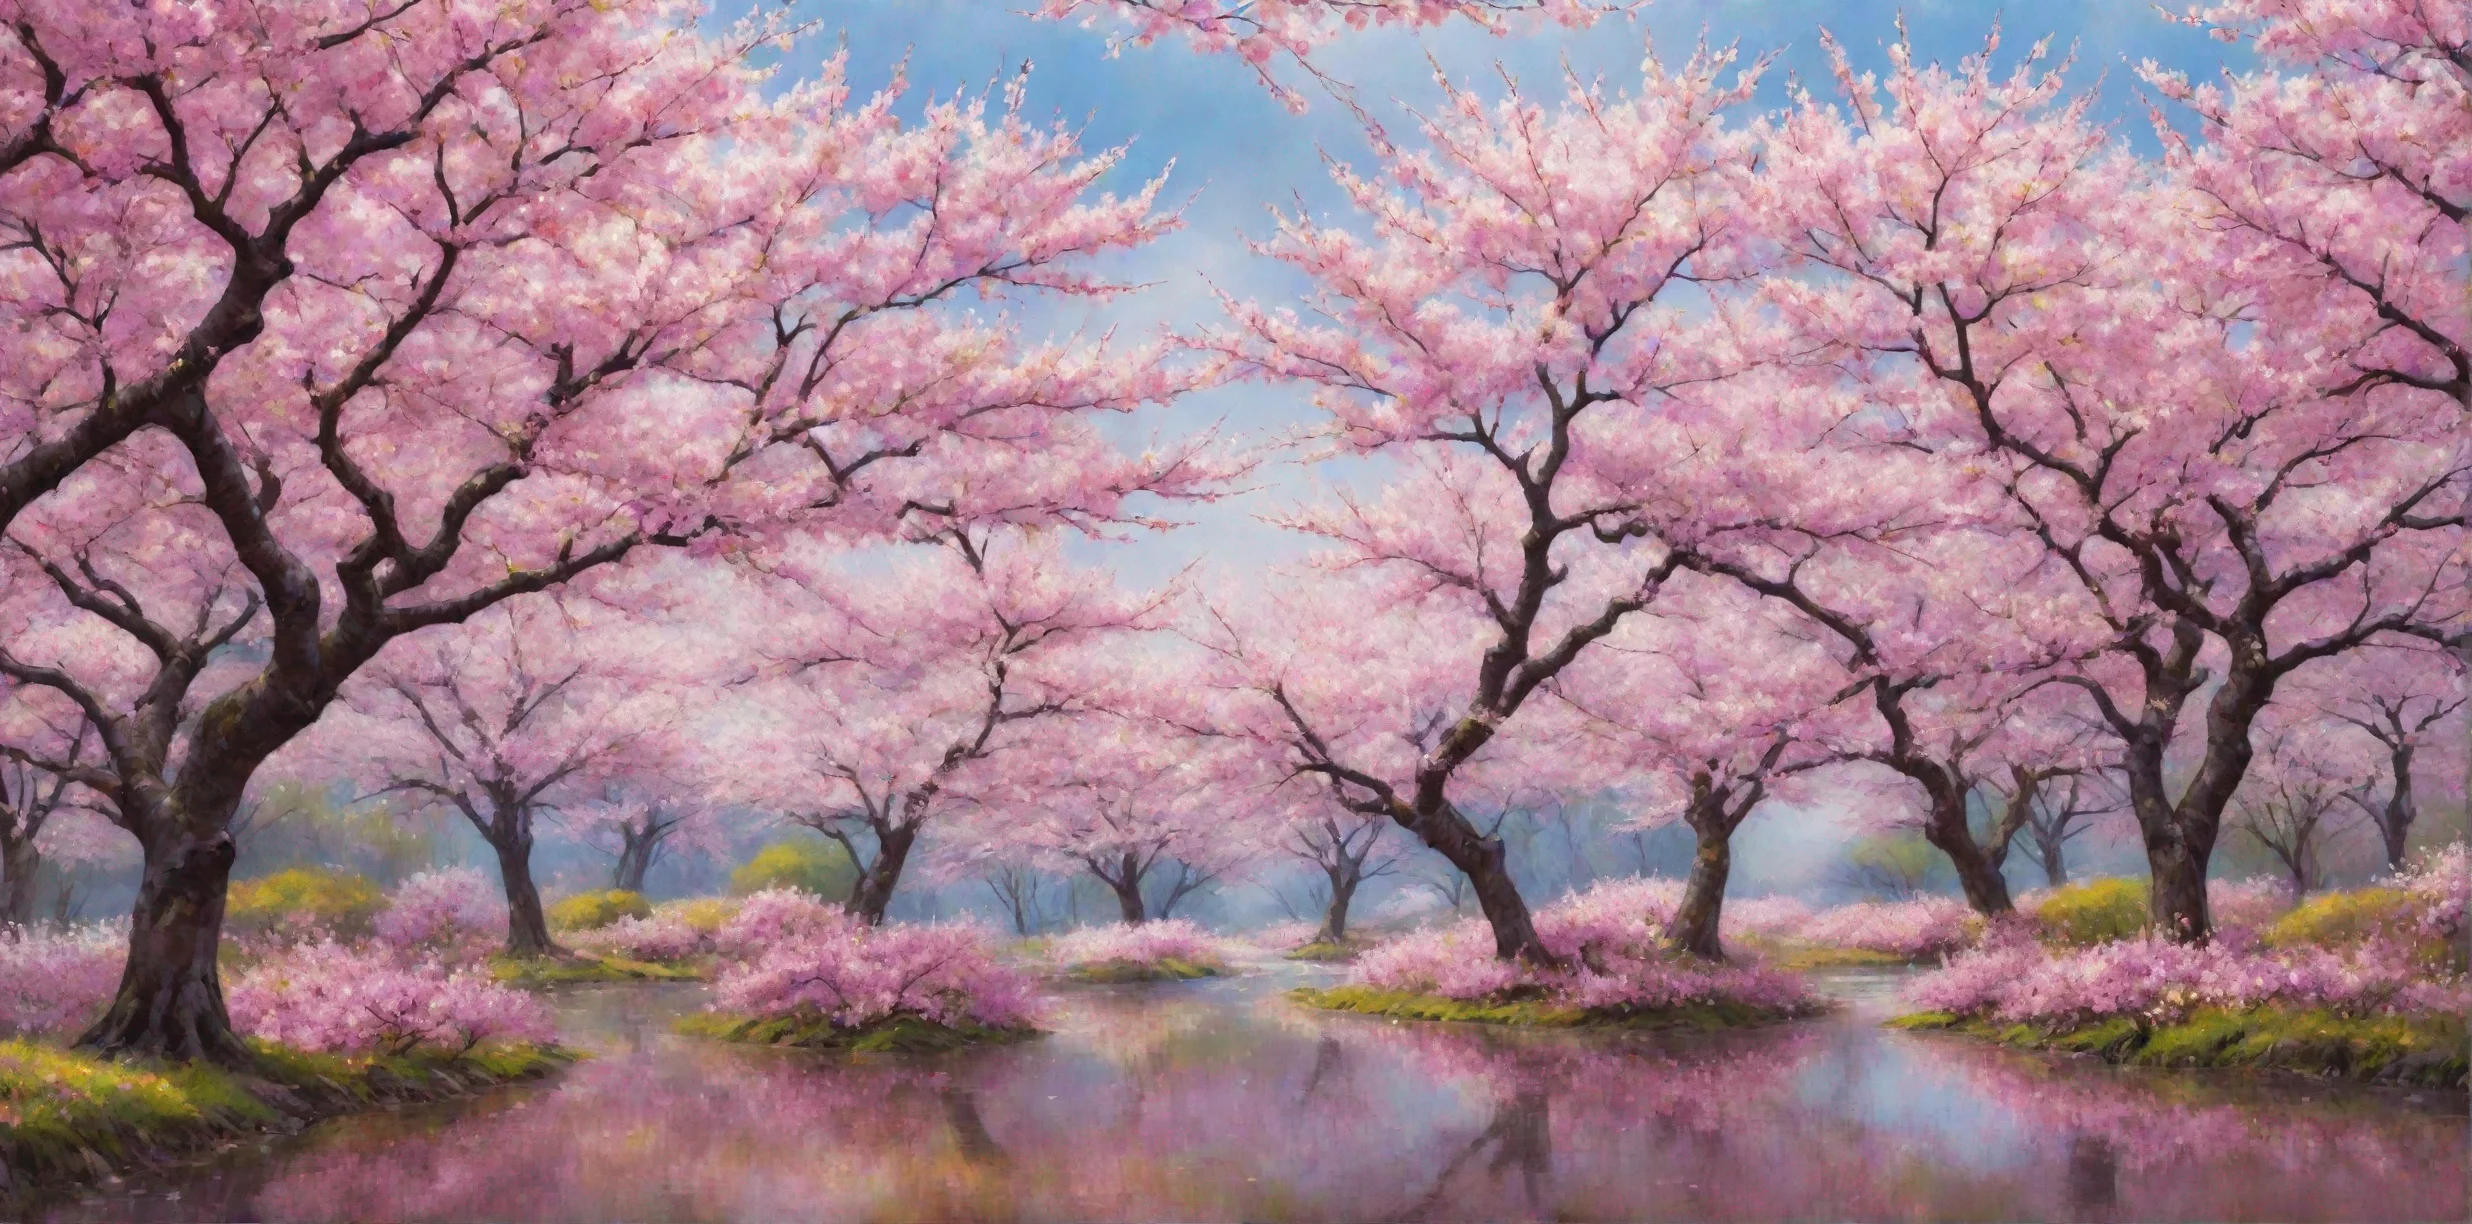 artistic epic cherry blossom bright magical